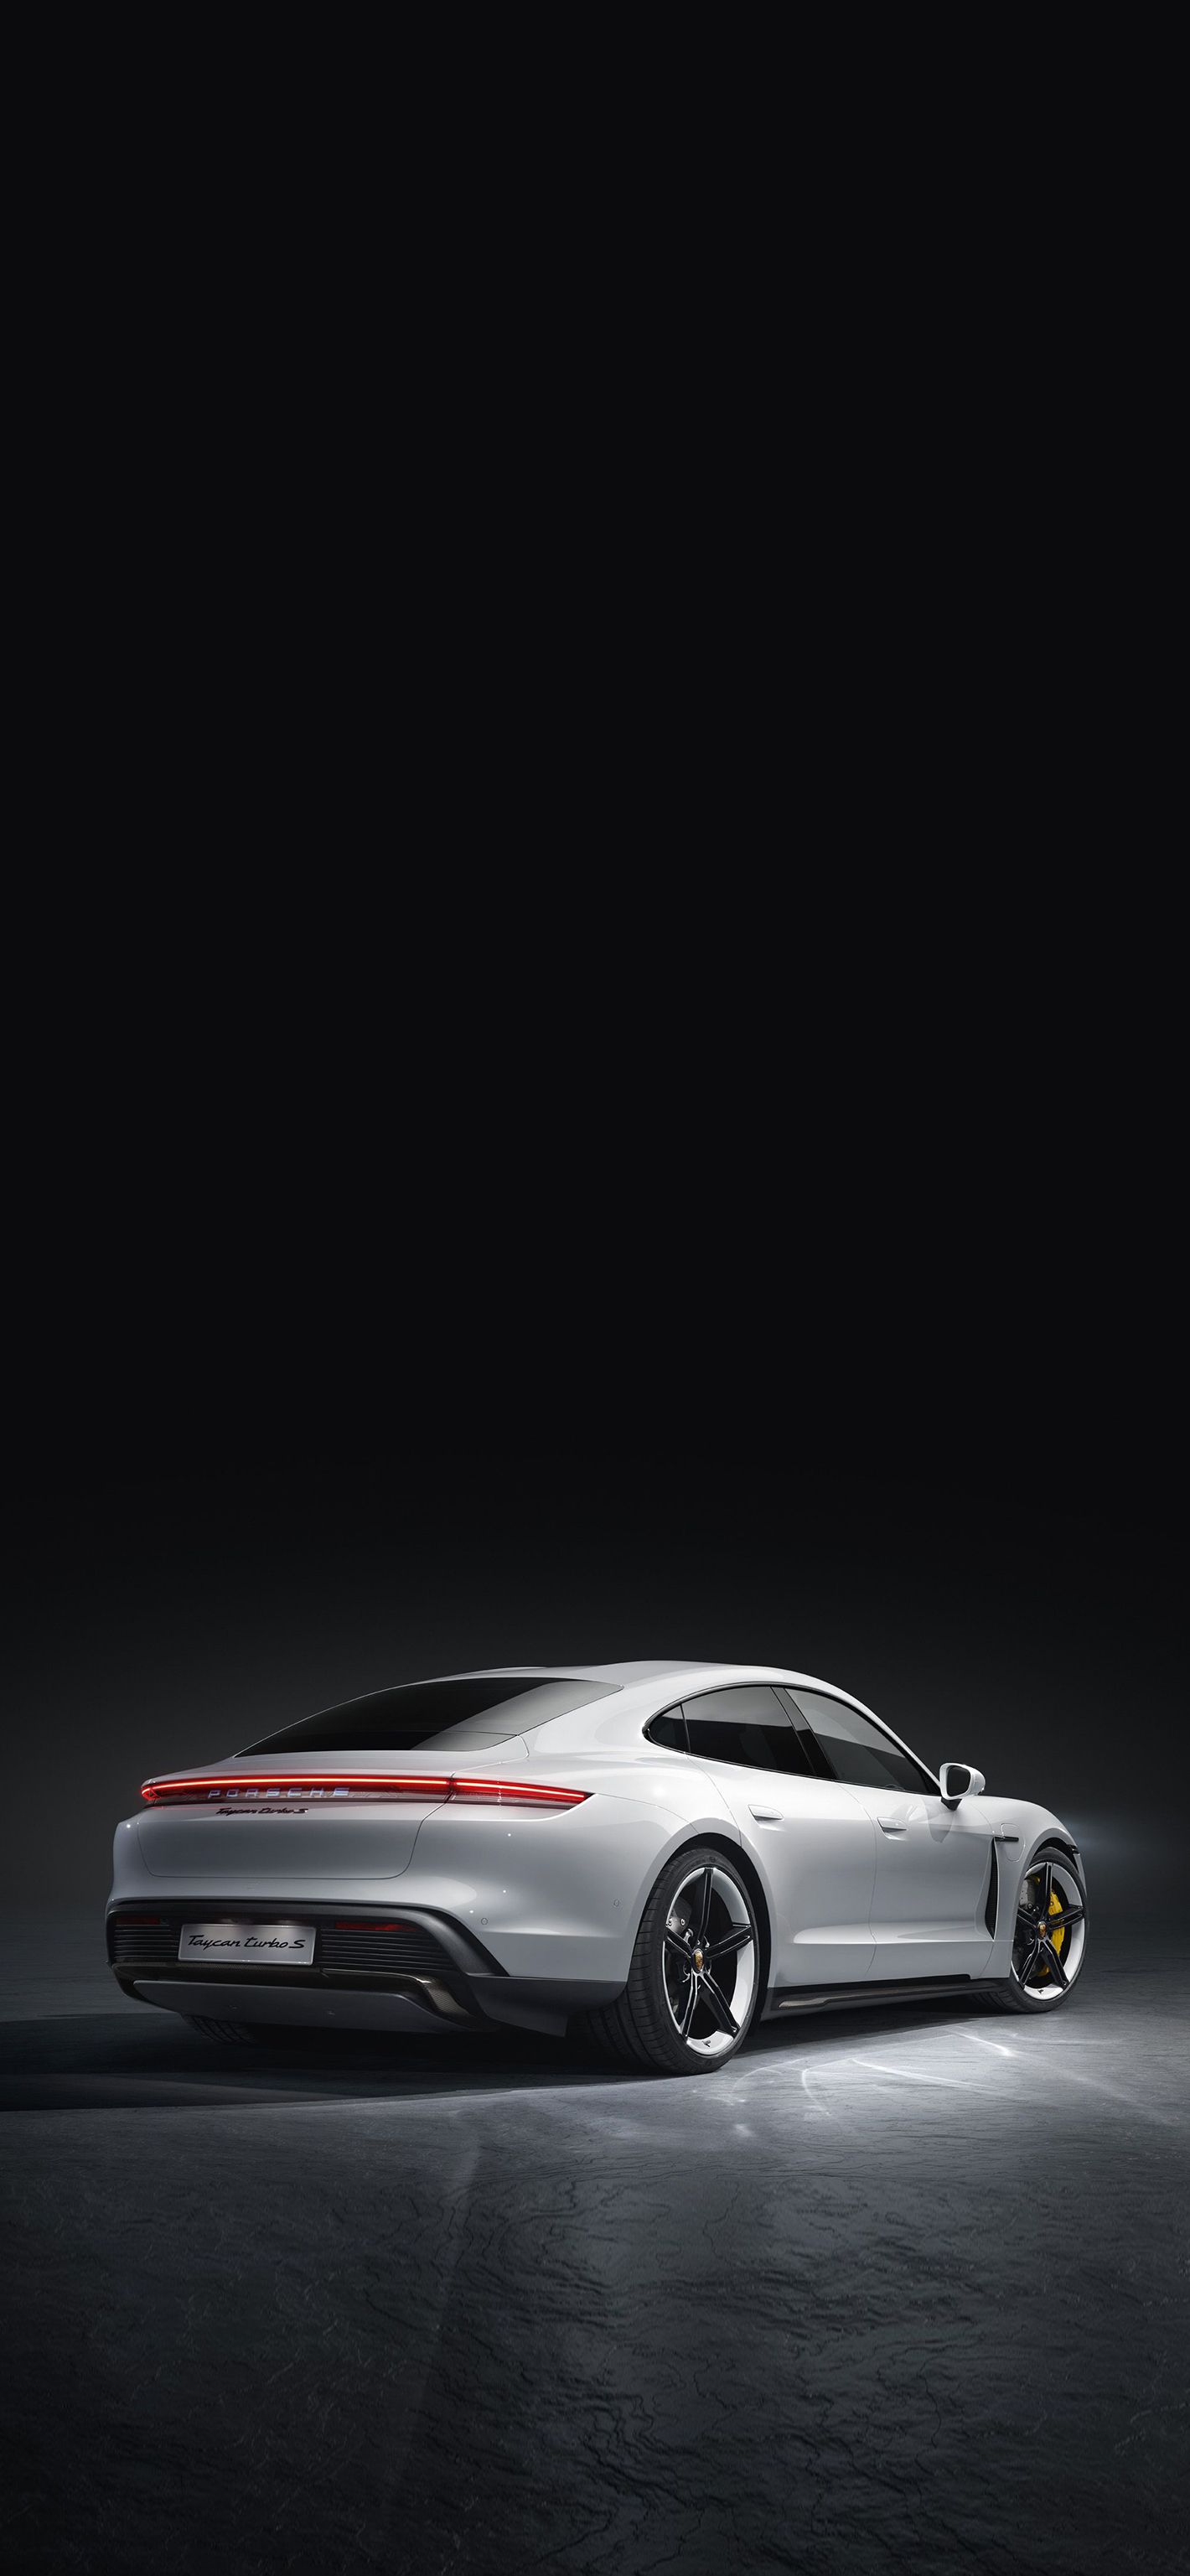 Porsche Taycan Turbo S. Porsche taycan, Mercedes wallpaper, Porsche iphone wallpaper